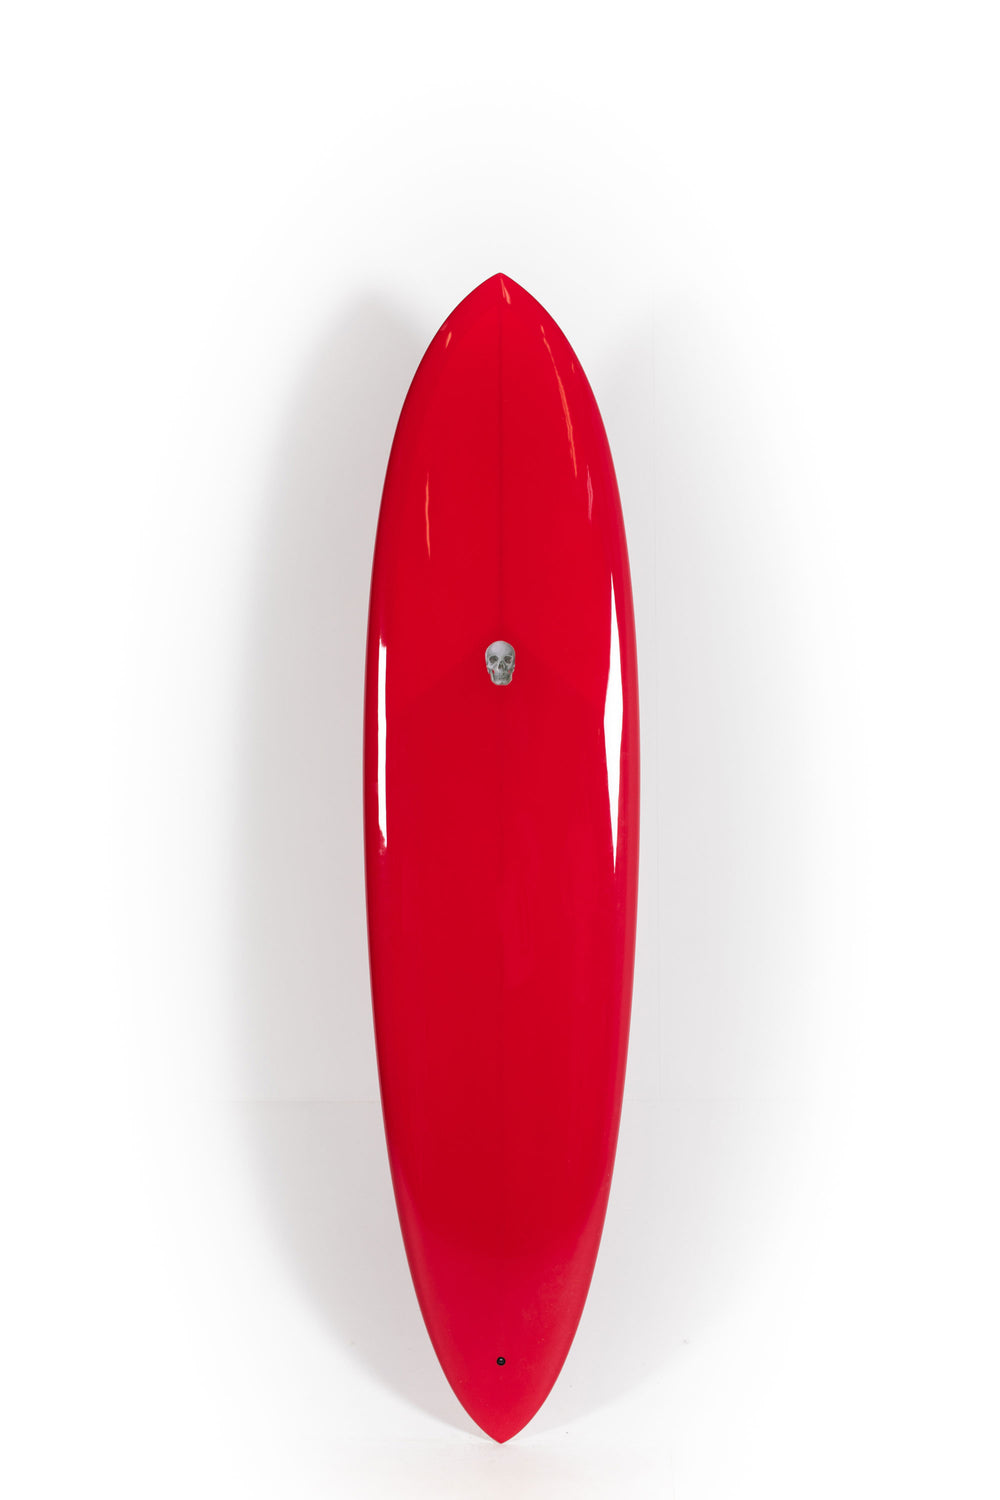 Christenson Surfboards - C-BUCKET - 7'4